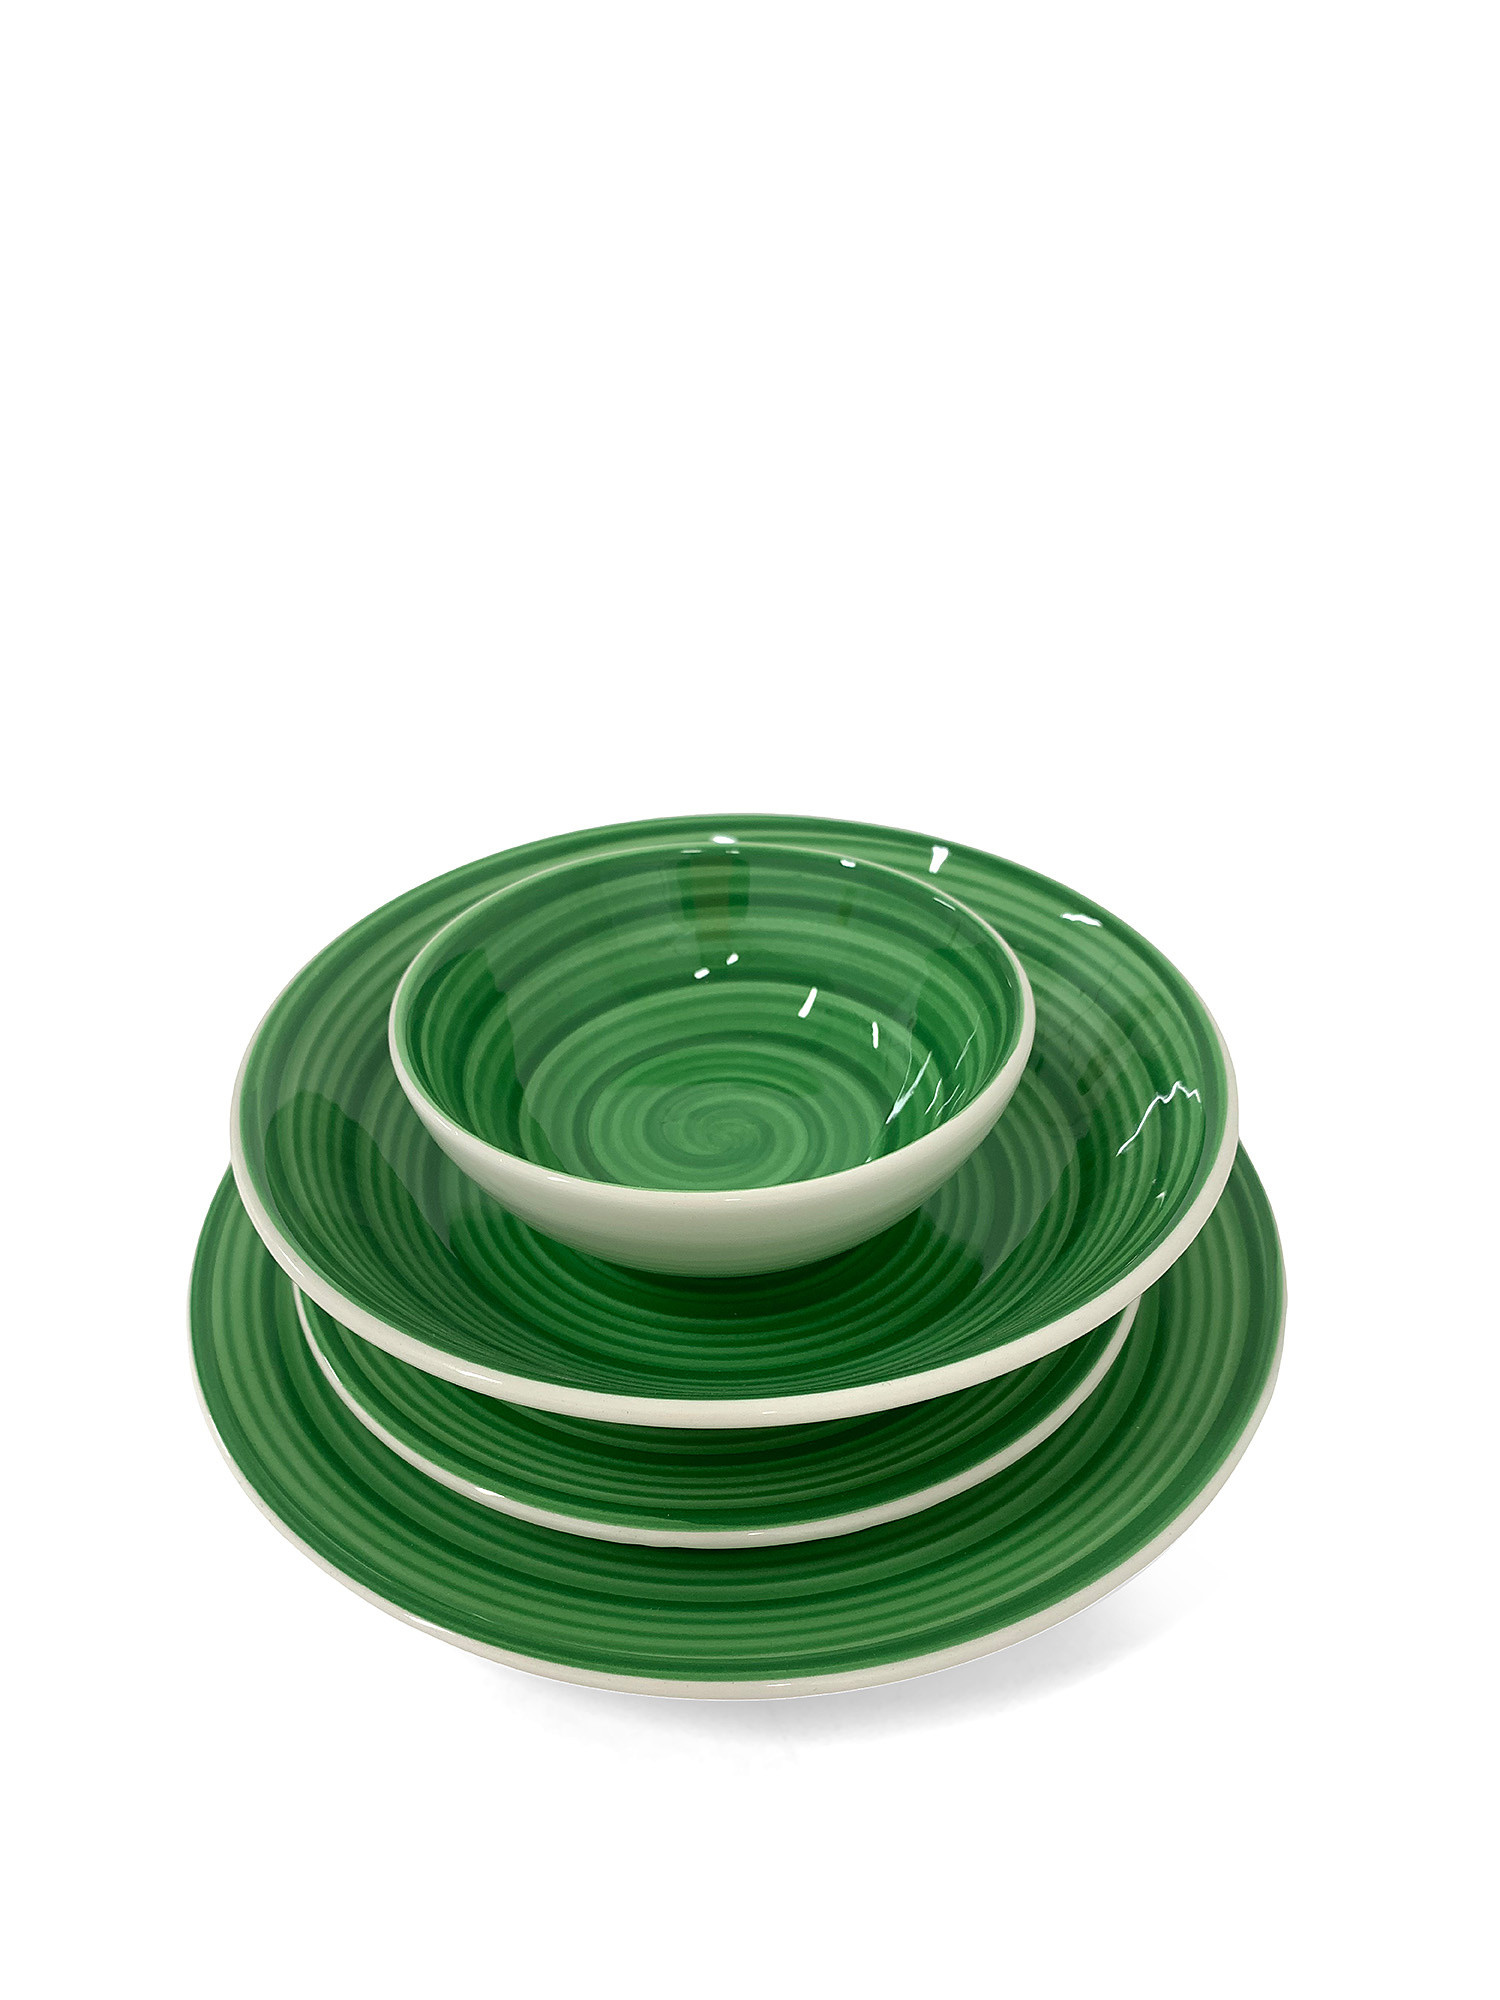 Piatto frutta ceramica dipinta a mano Spirale, Verde, large image number 1